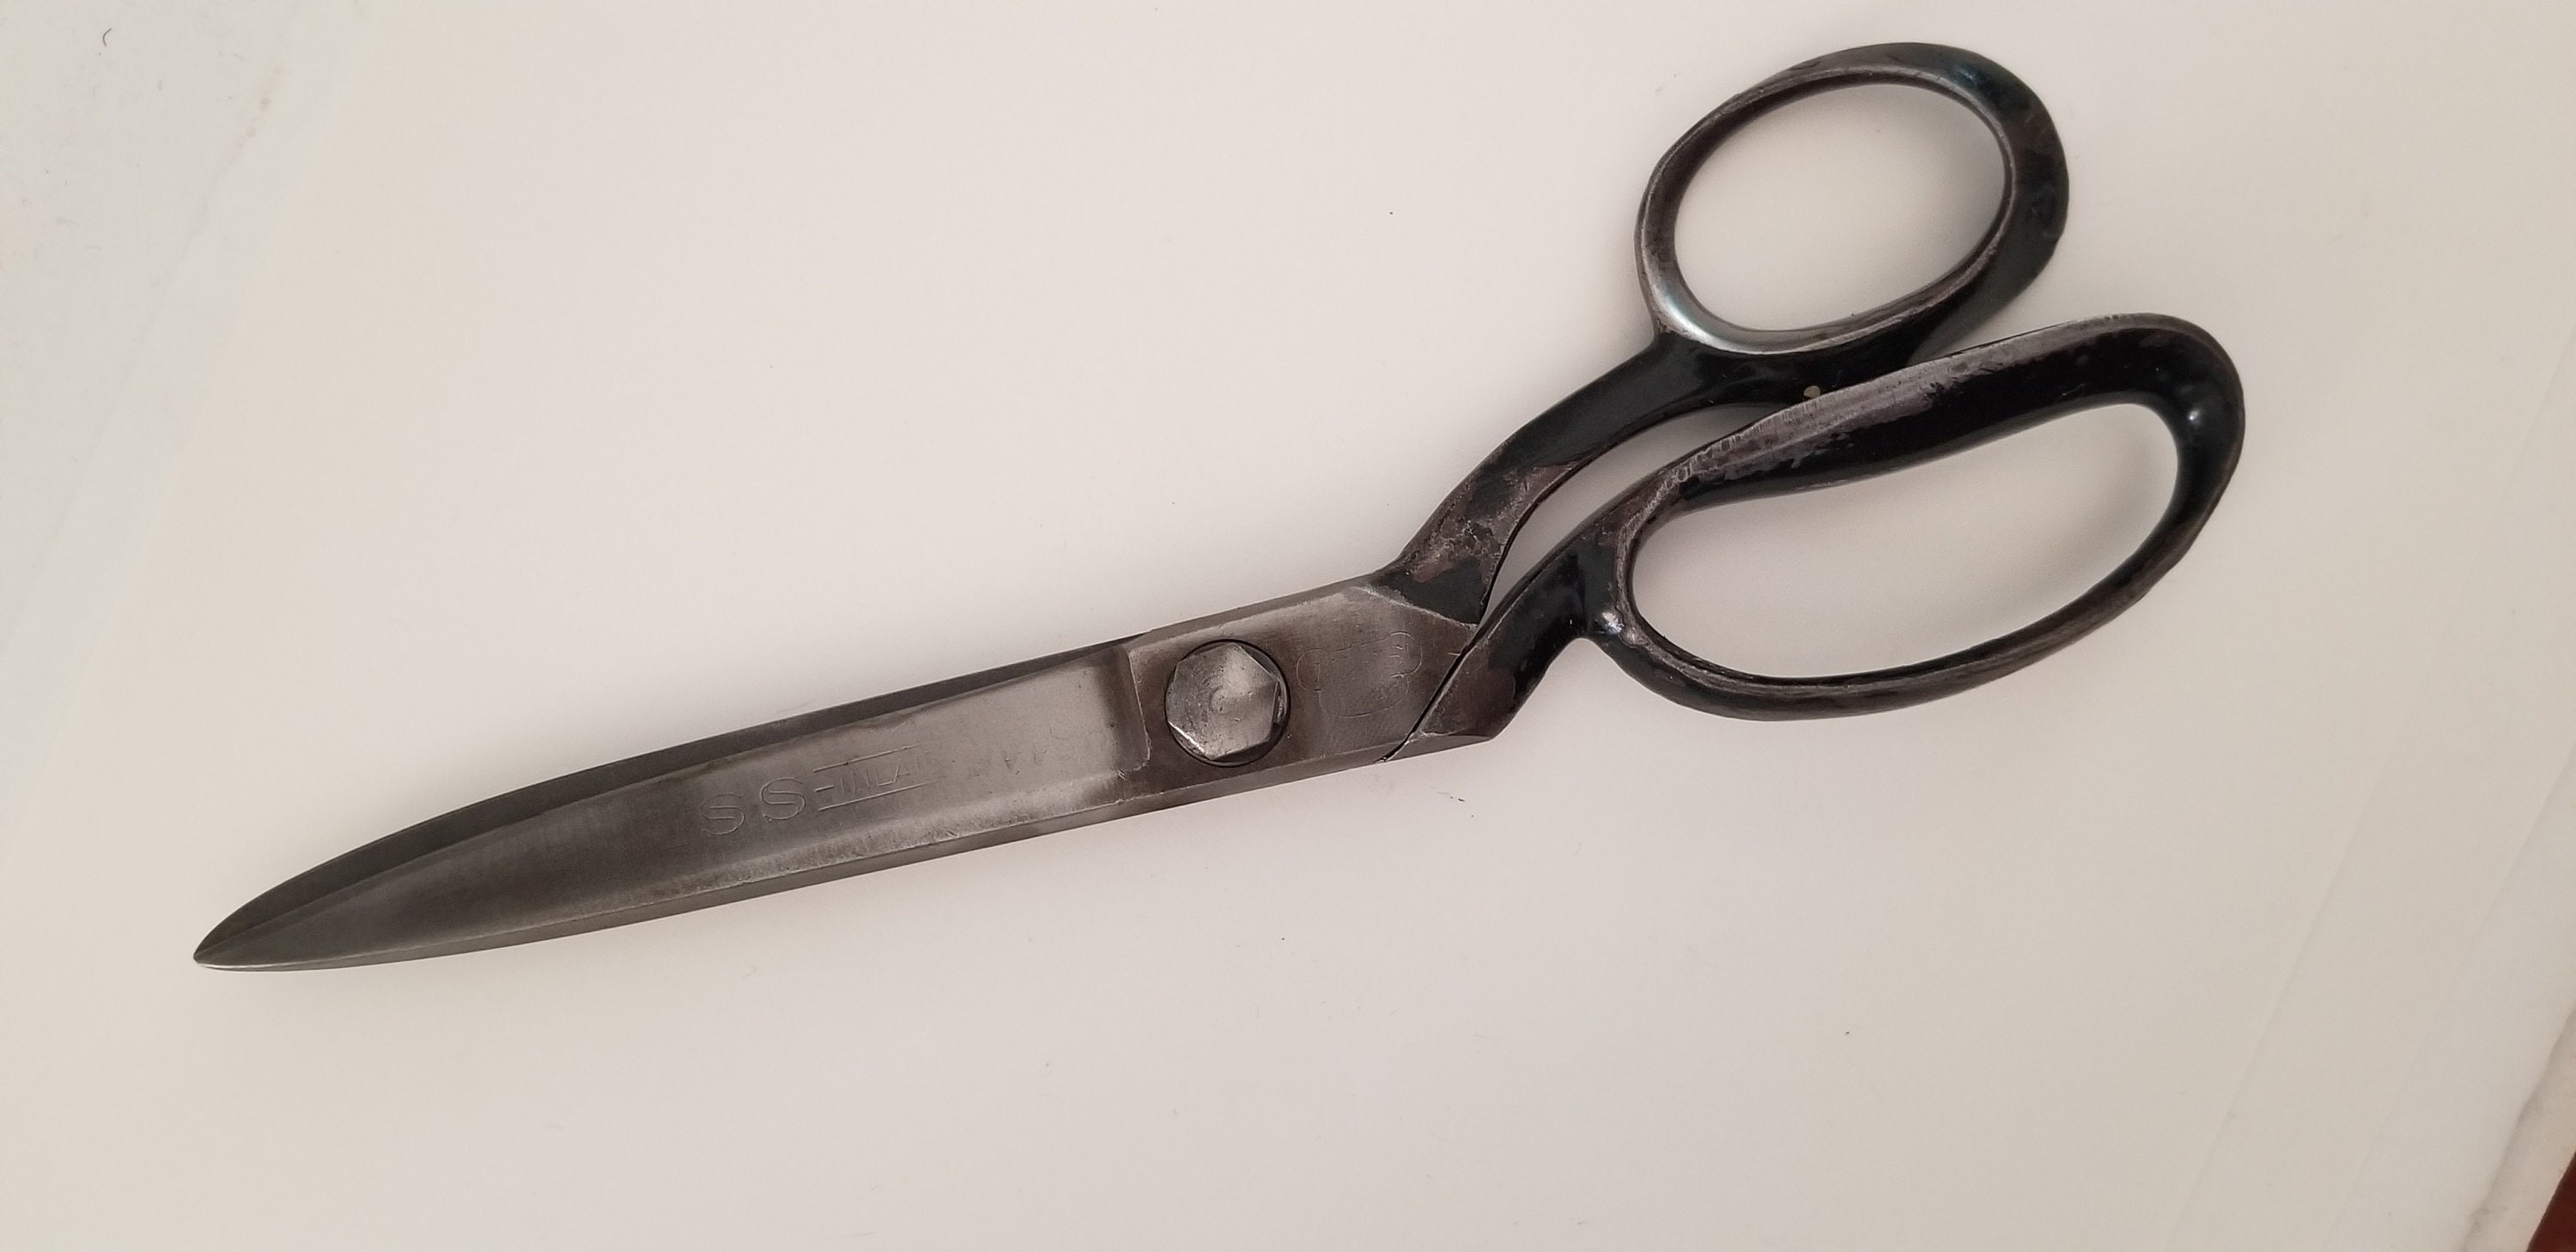 Wiss Tailors Dressmakers Scissors Vintage 1920s Shears